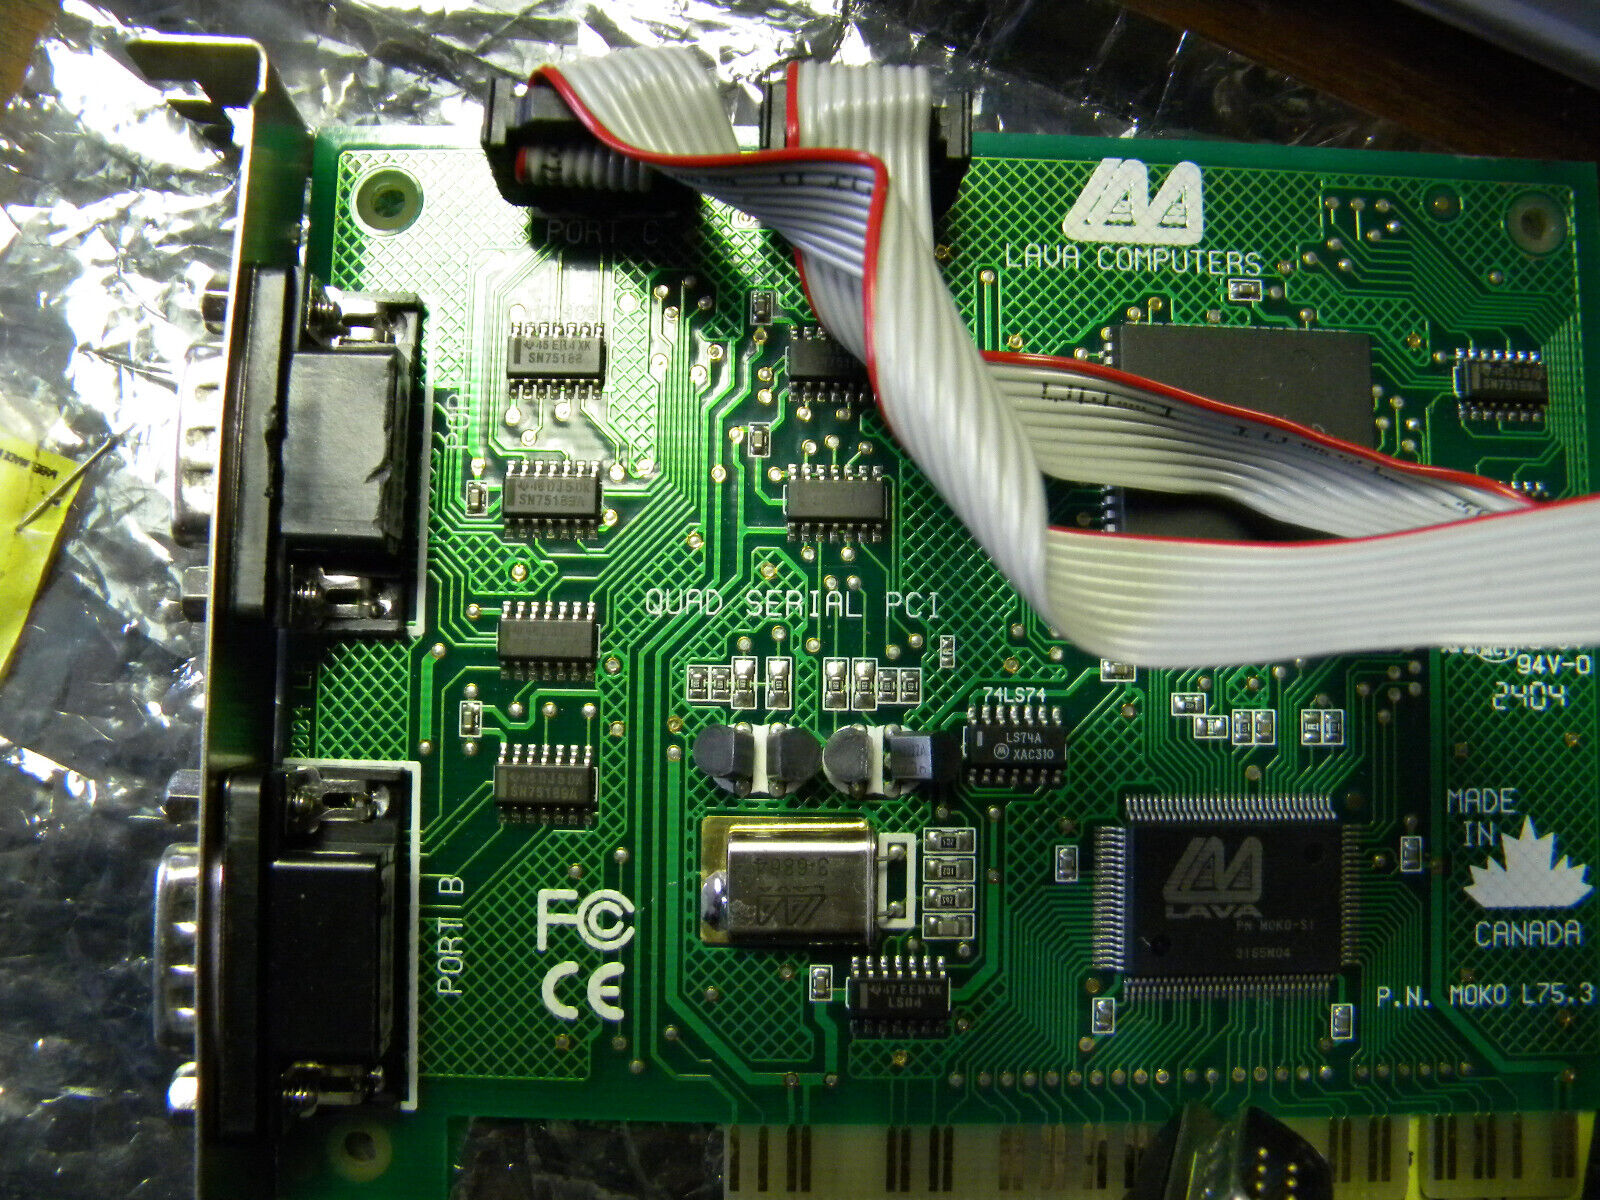 Lava Computers serial pci dual quad port 9 Pin DB9 Card- A B C slot